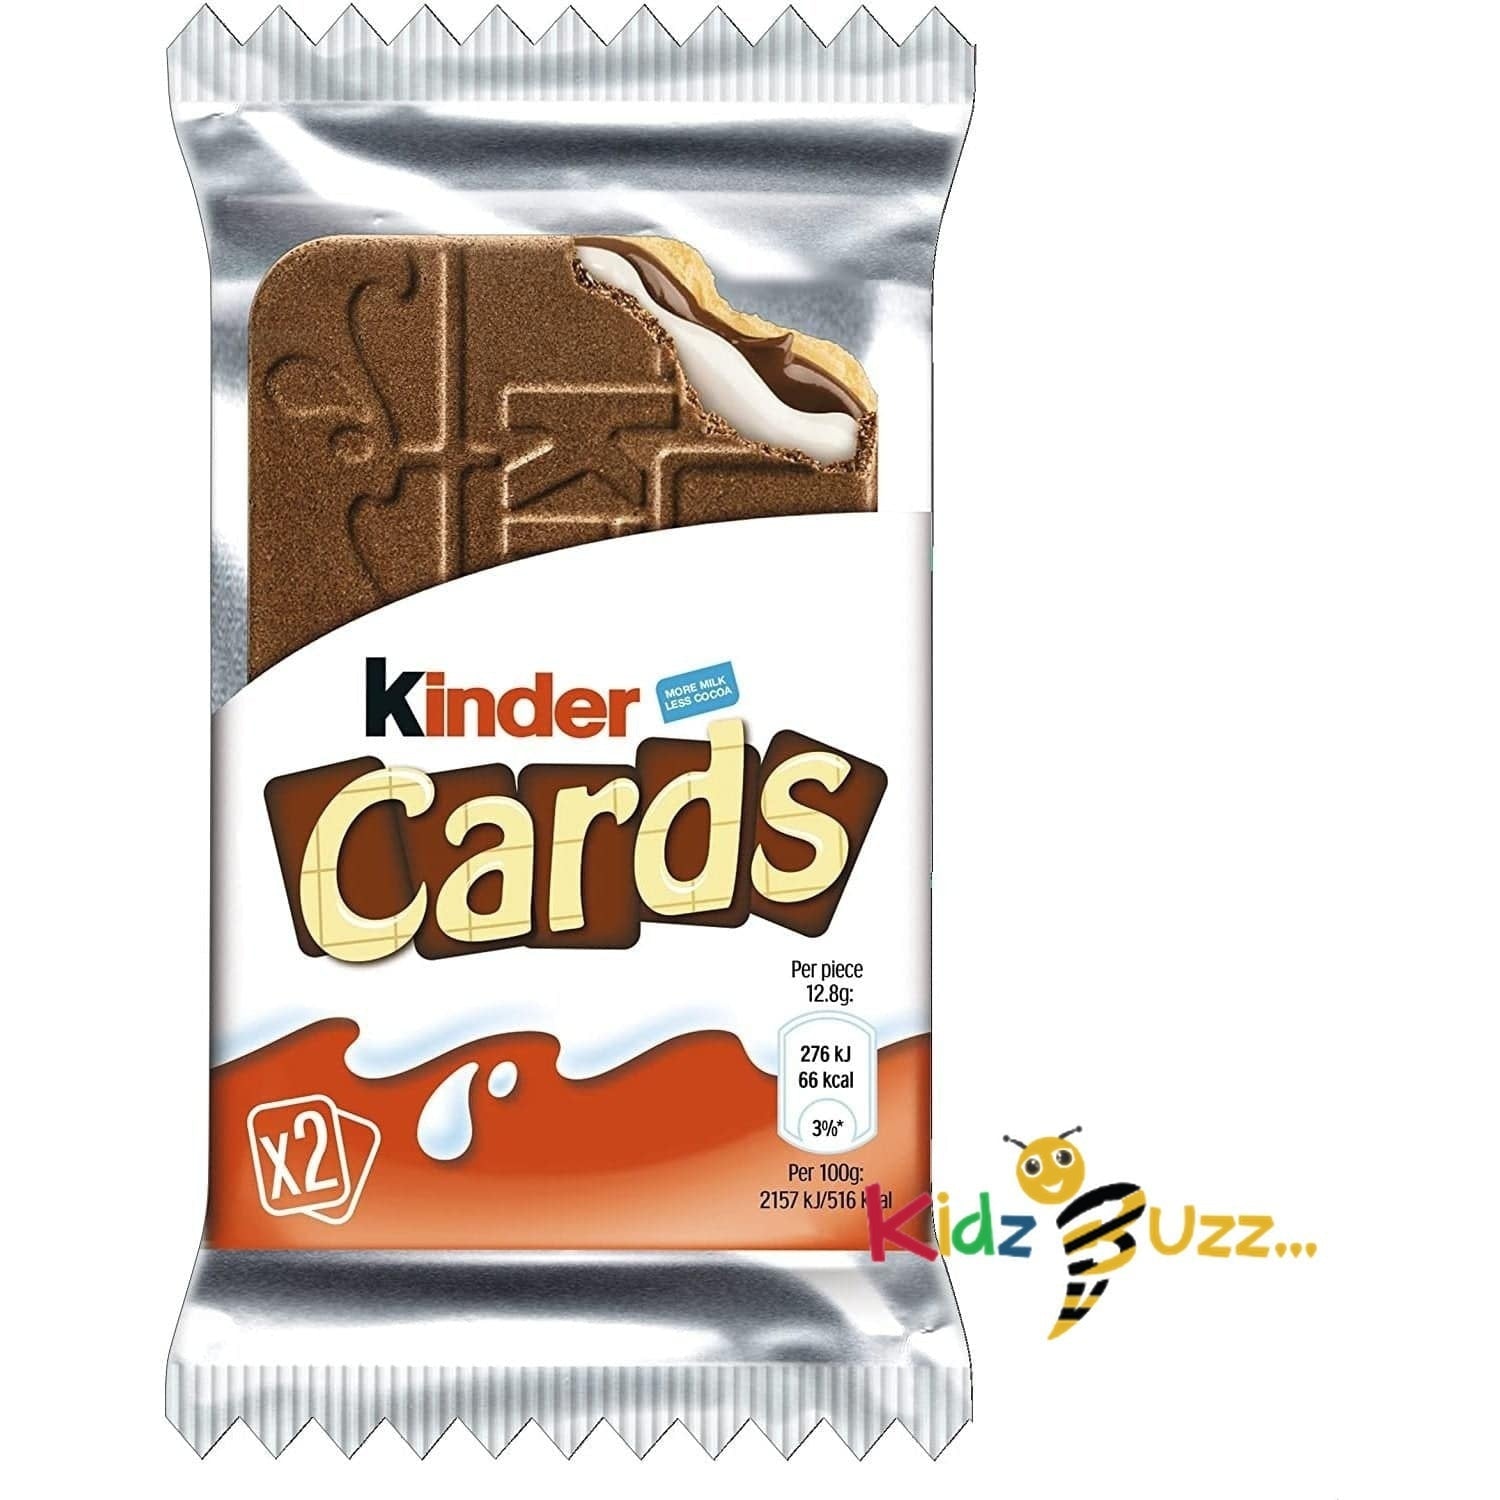 Kinder Cards Milk & White Chocolate in Bulk 25.6g x 4